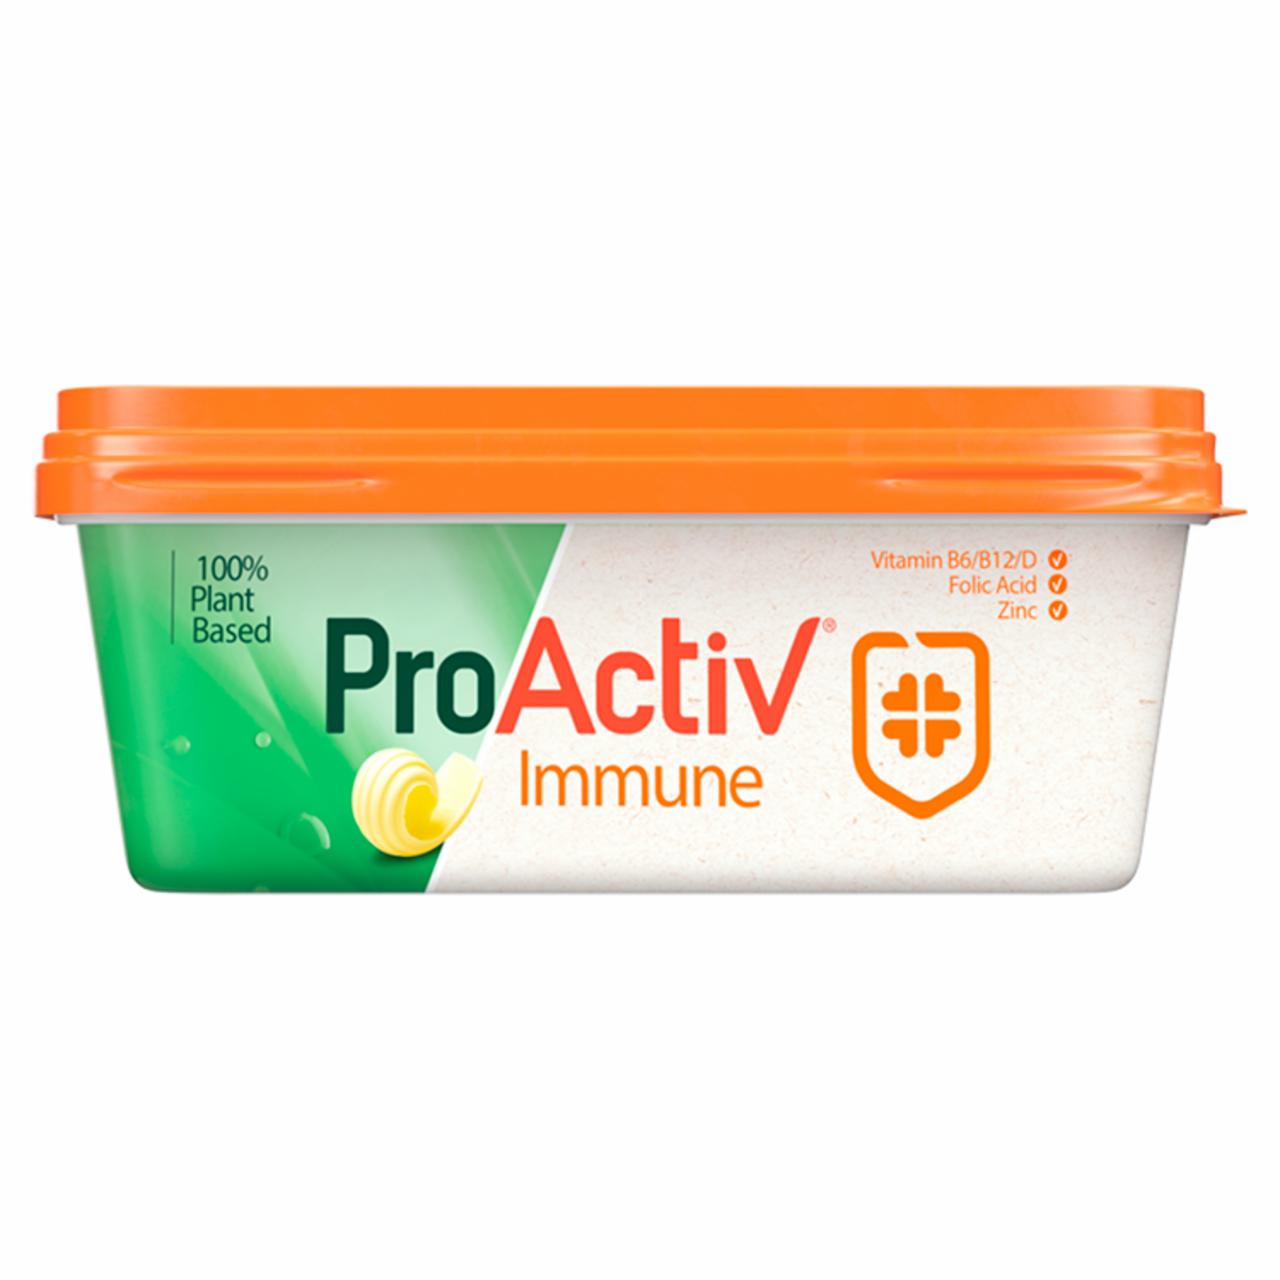 Képek - ProActiv Immune margarin 250 g